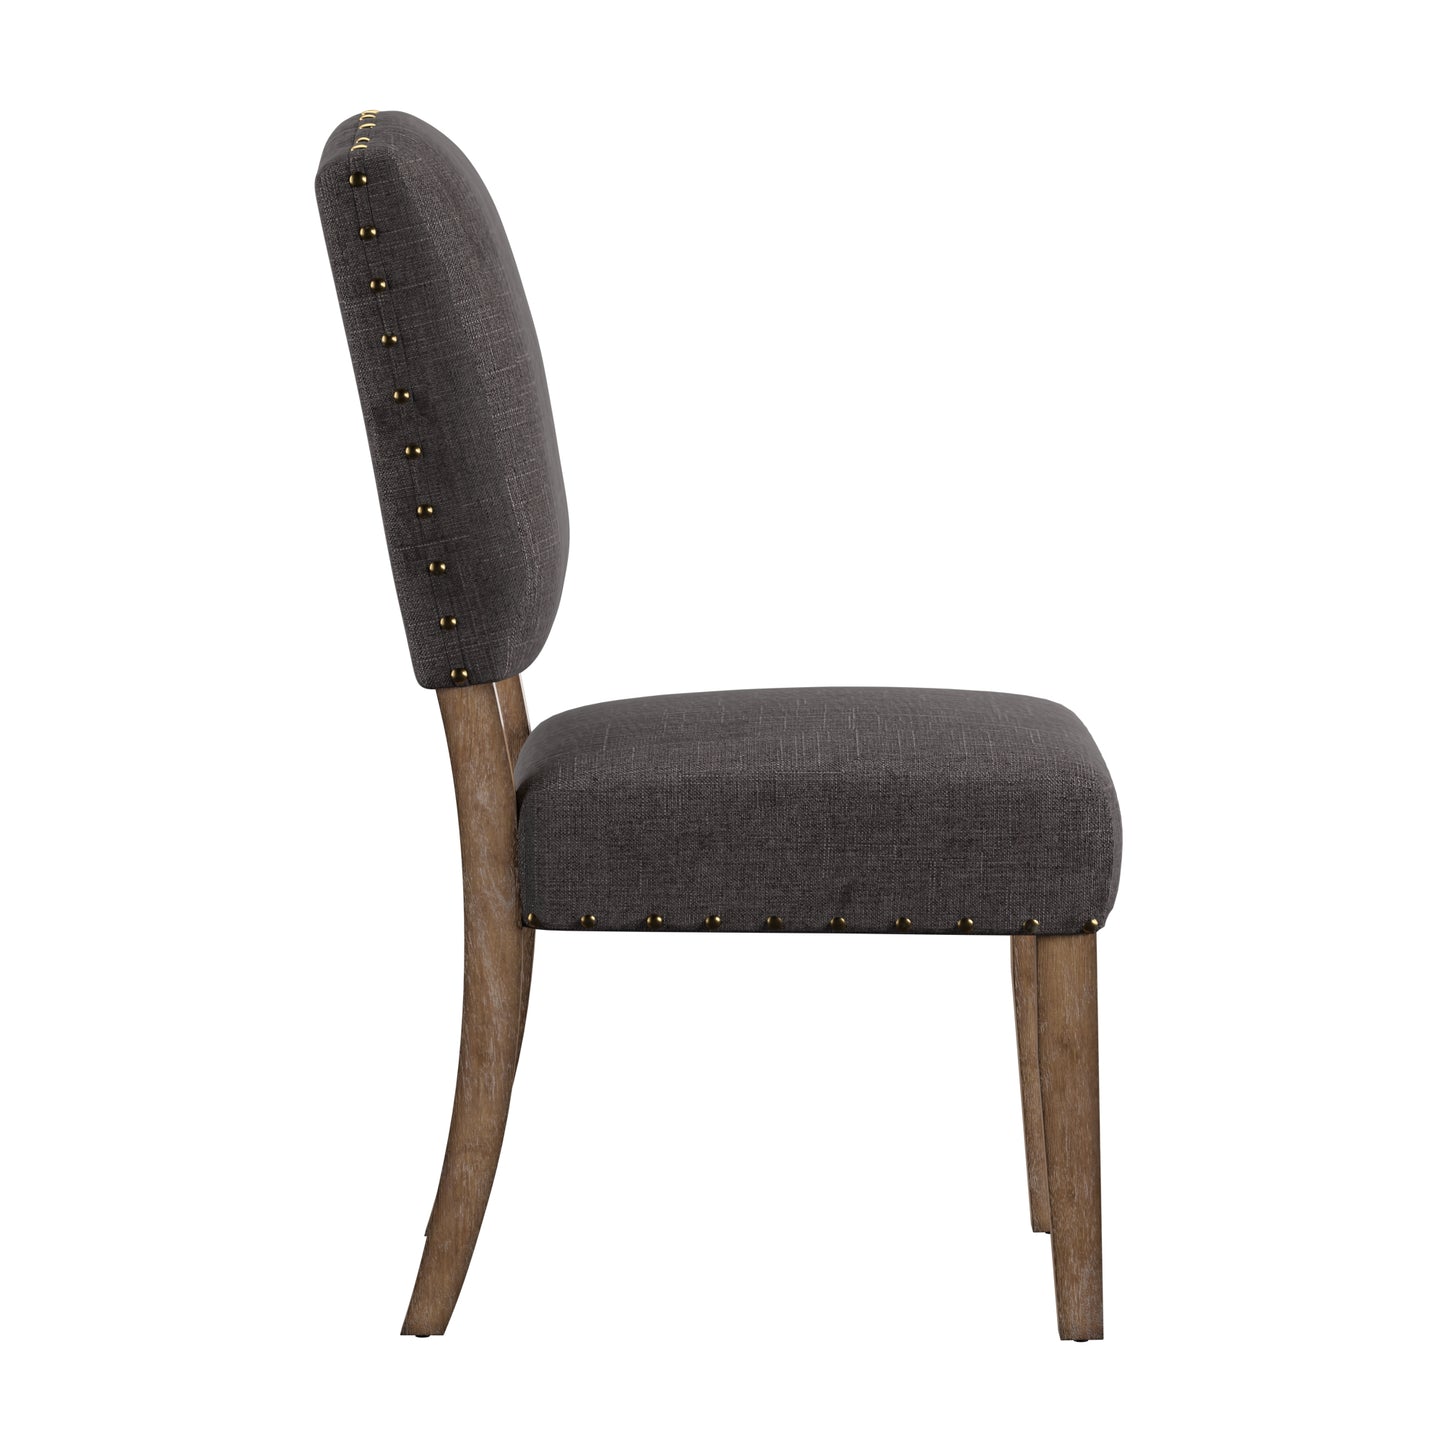 Nailhead Upholstered Dining Chairs (Set of 2) - Natural Finish, Dark Grey Linen